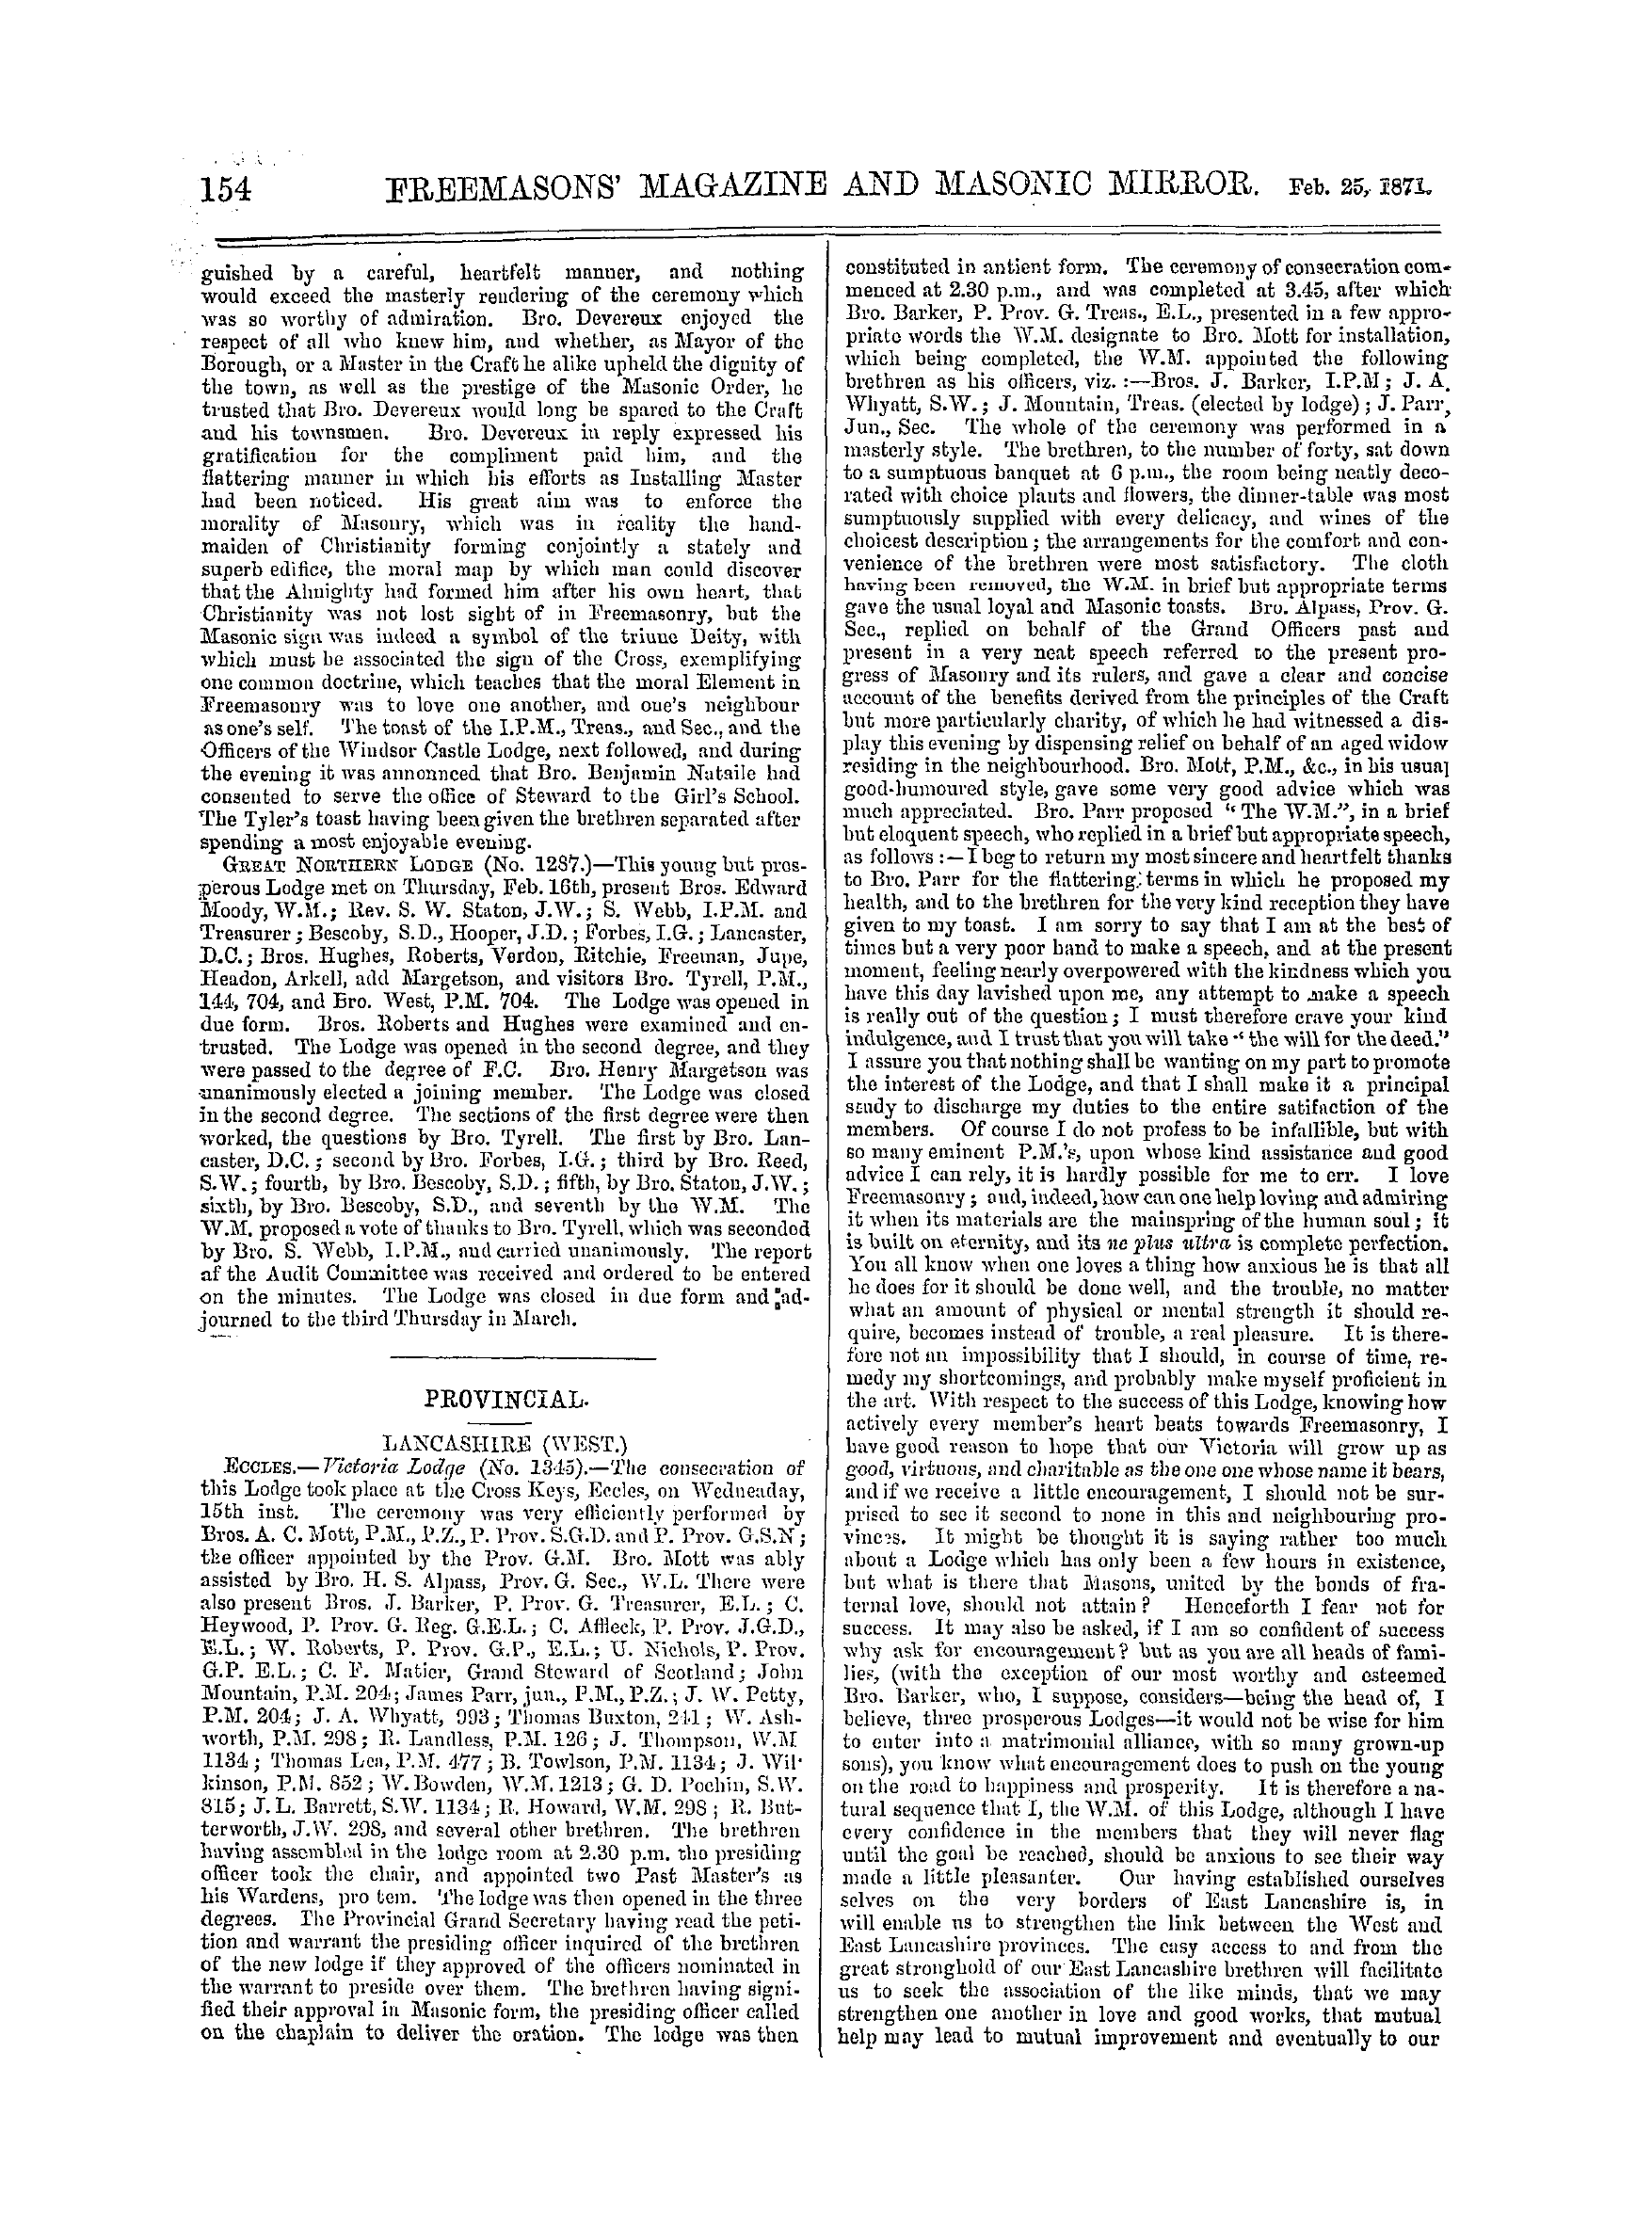 The Freemasons' Monthly Magazine: 1871-02-25 - Craft Masonry.